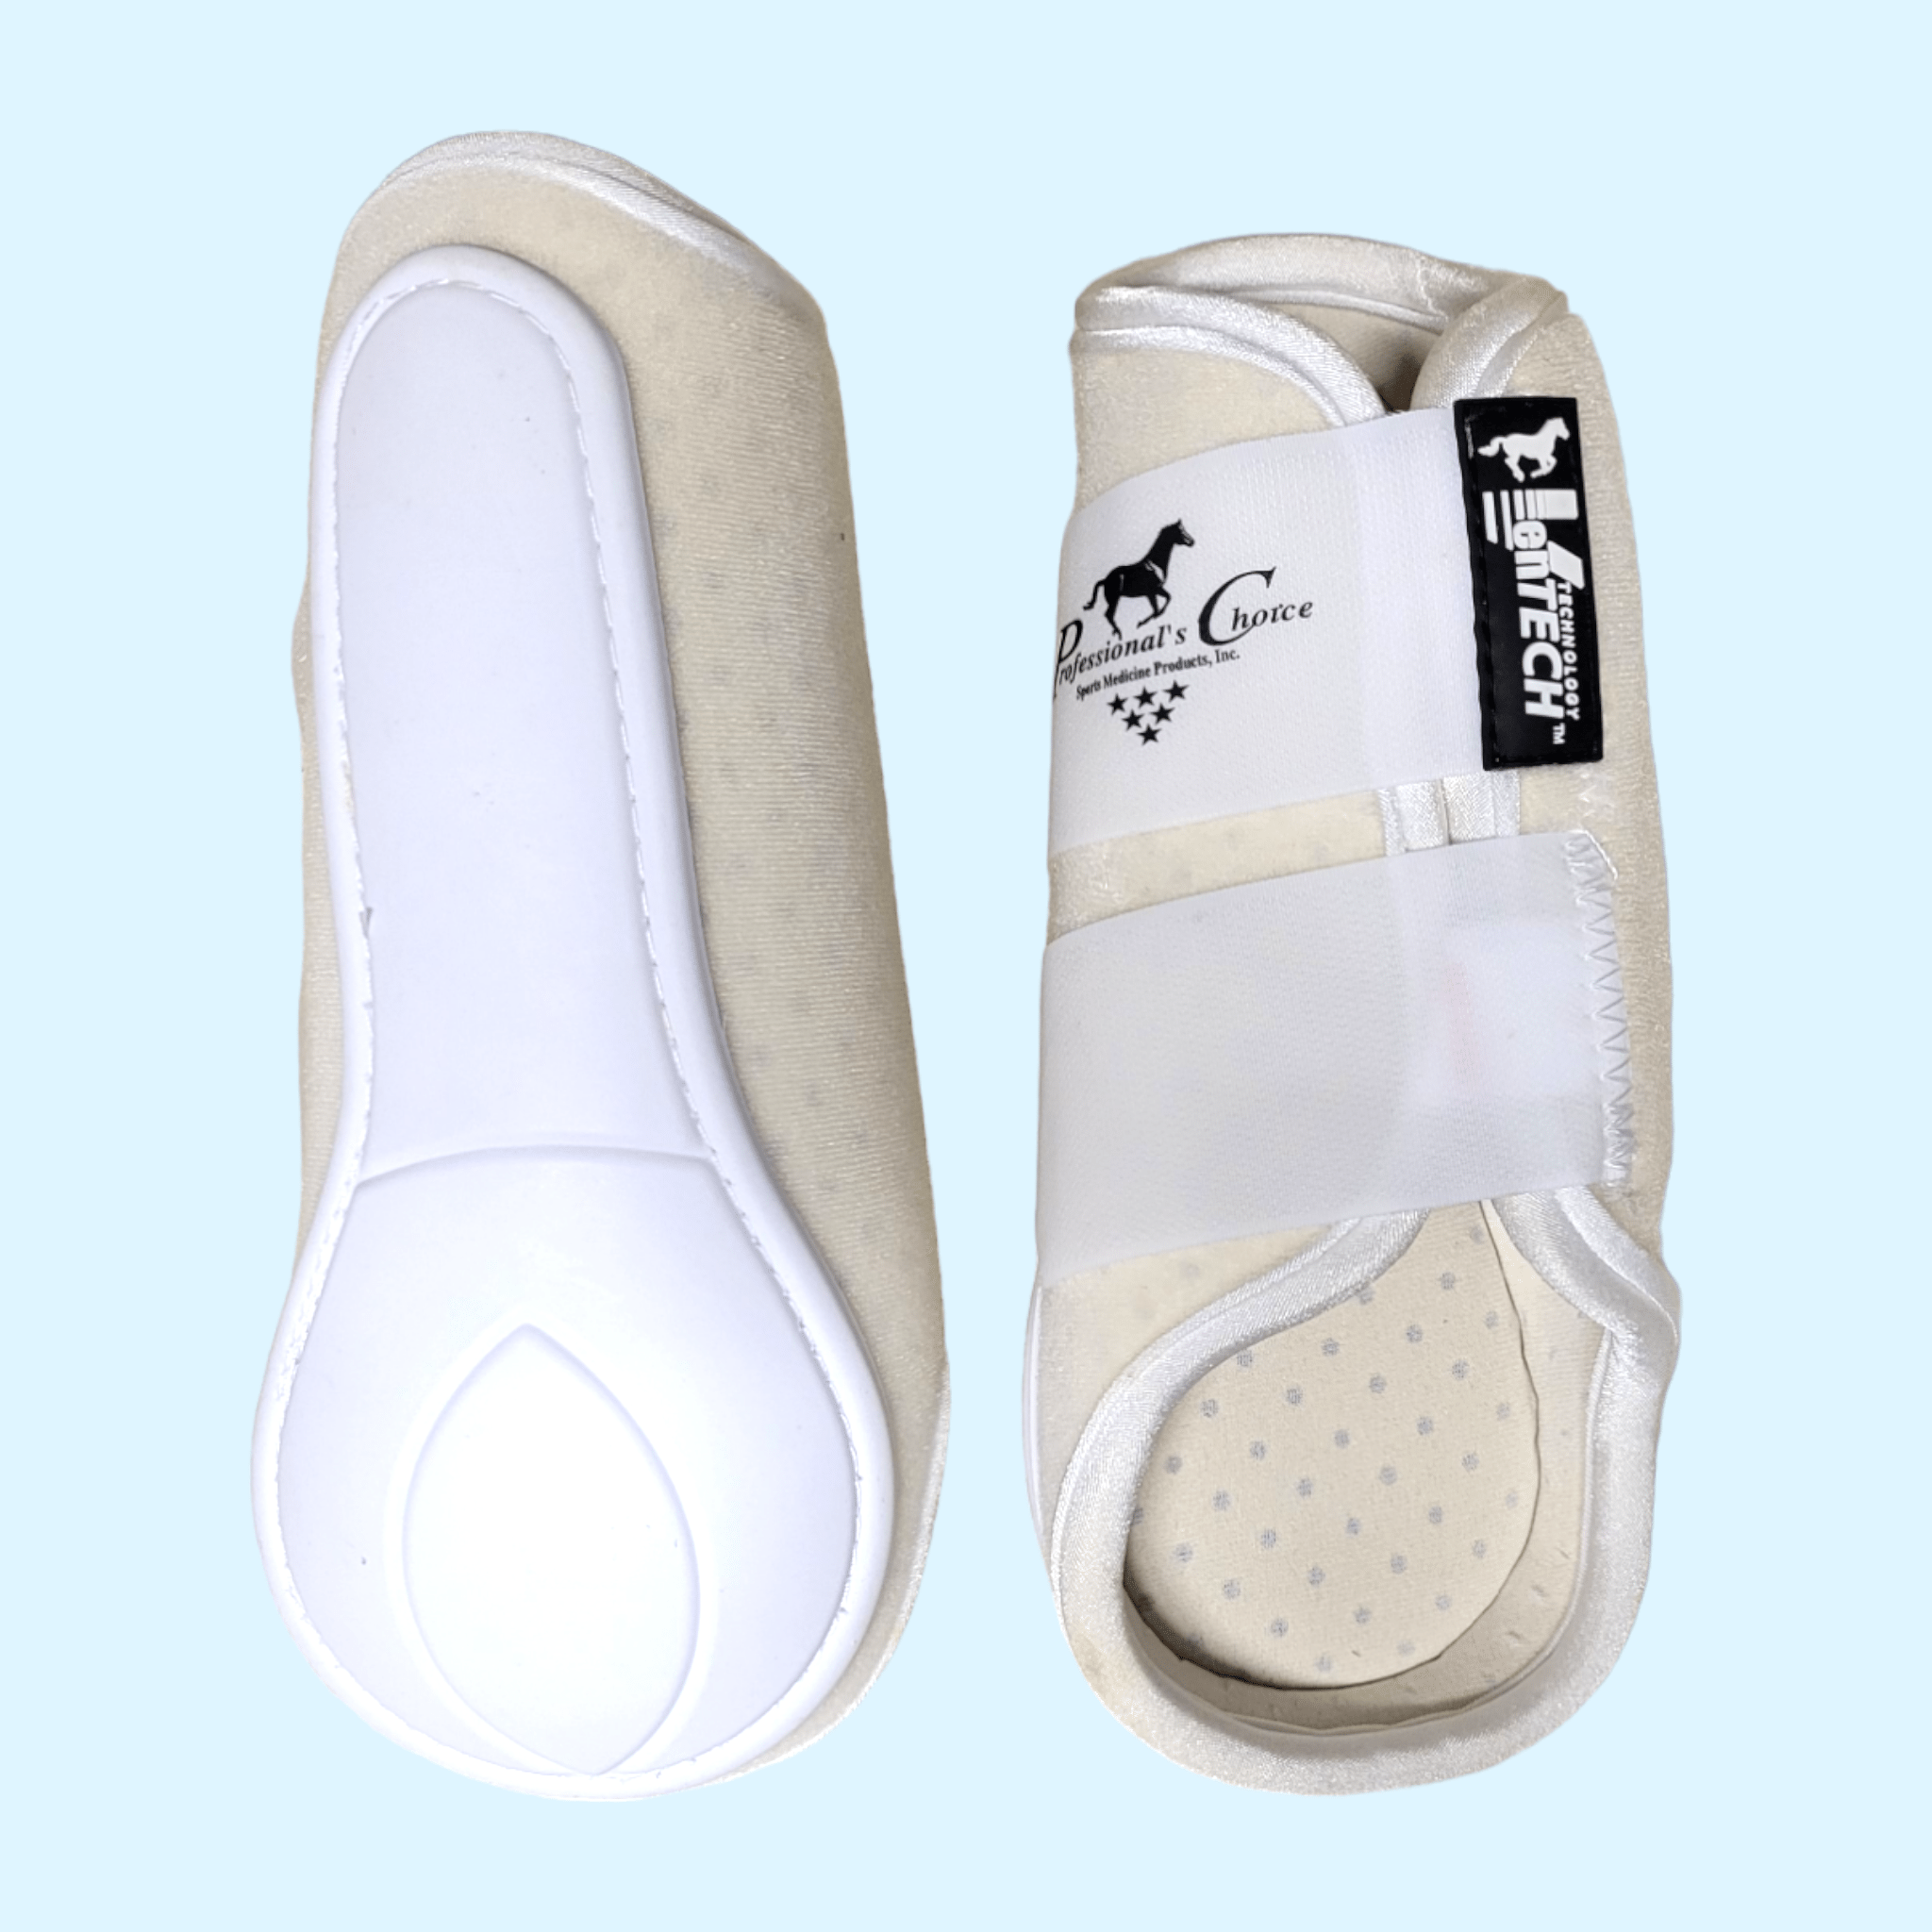 Professional's Choice VenTECH Splint Boots in White - Medium - Equine Exchange Tack Shop